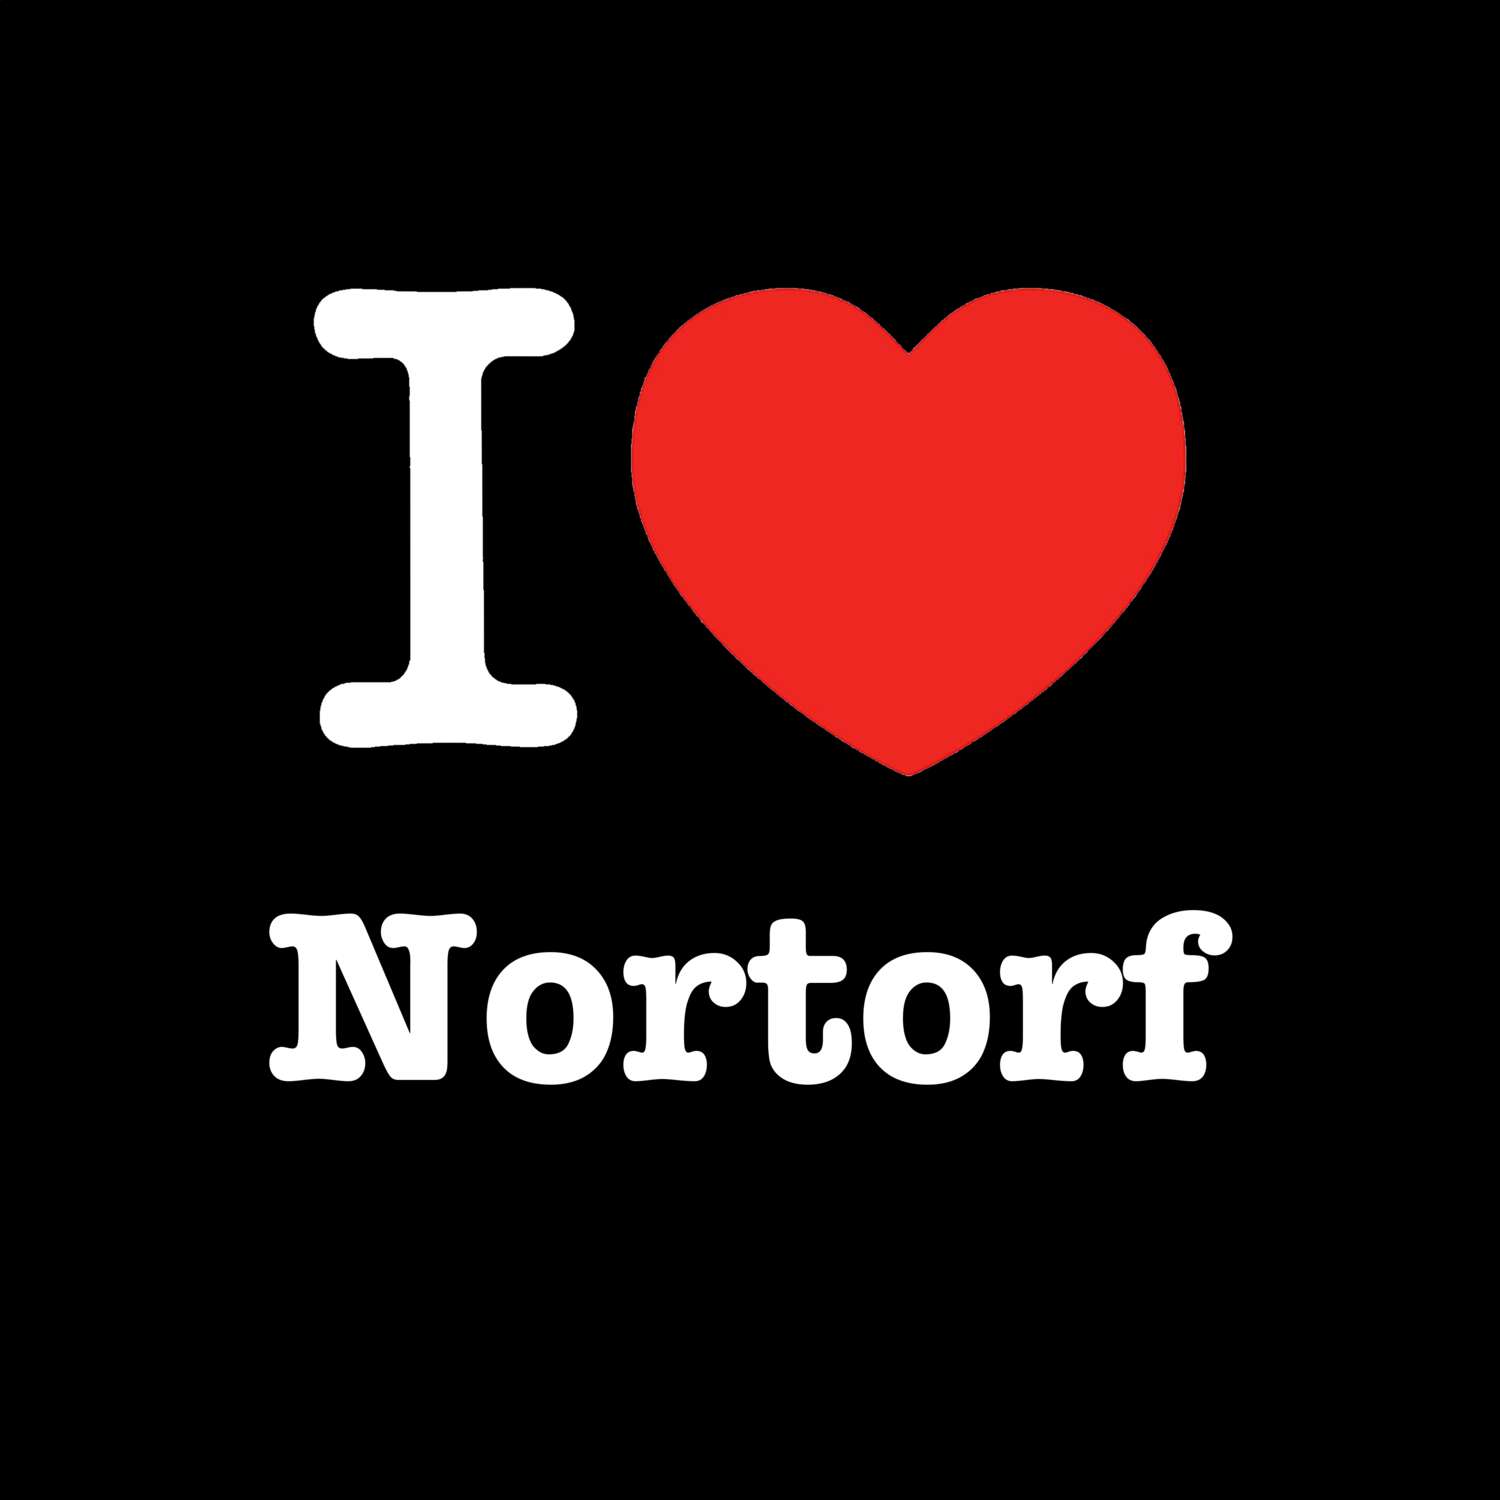 Nortorf T-Shirt »I love«